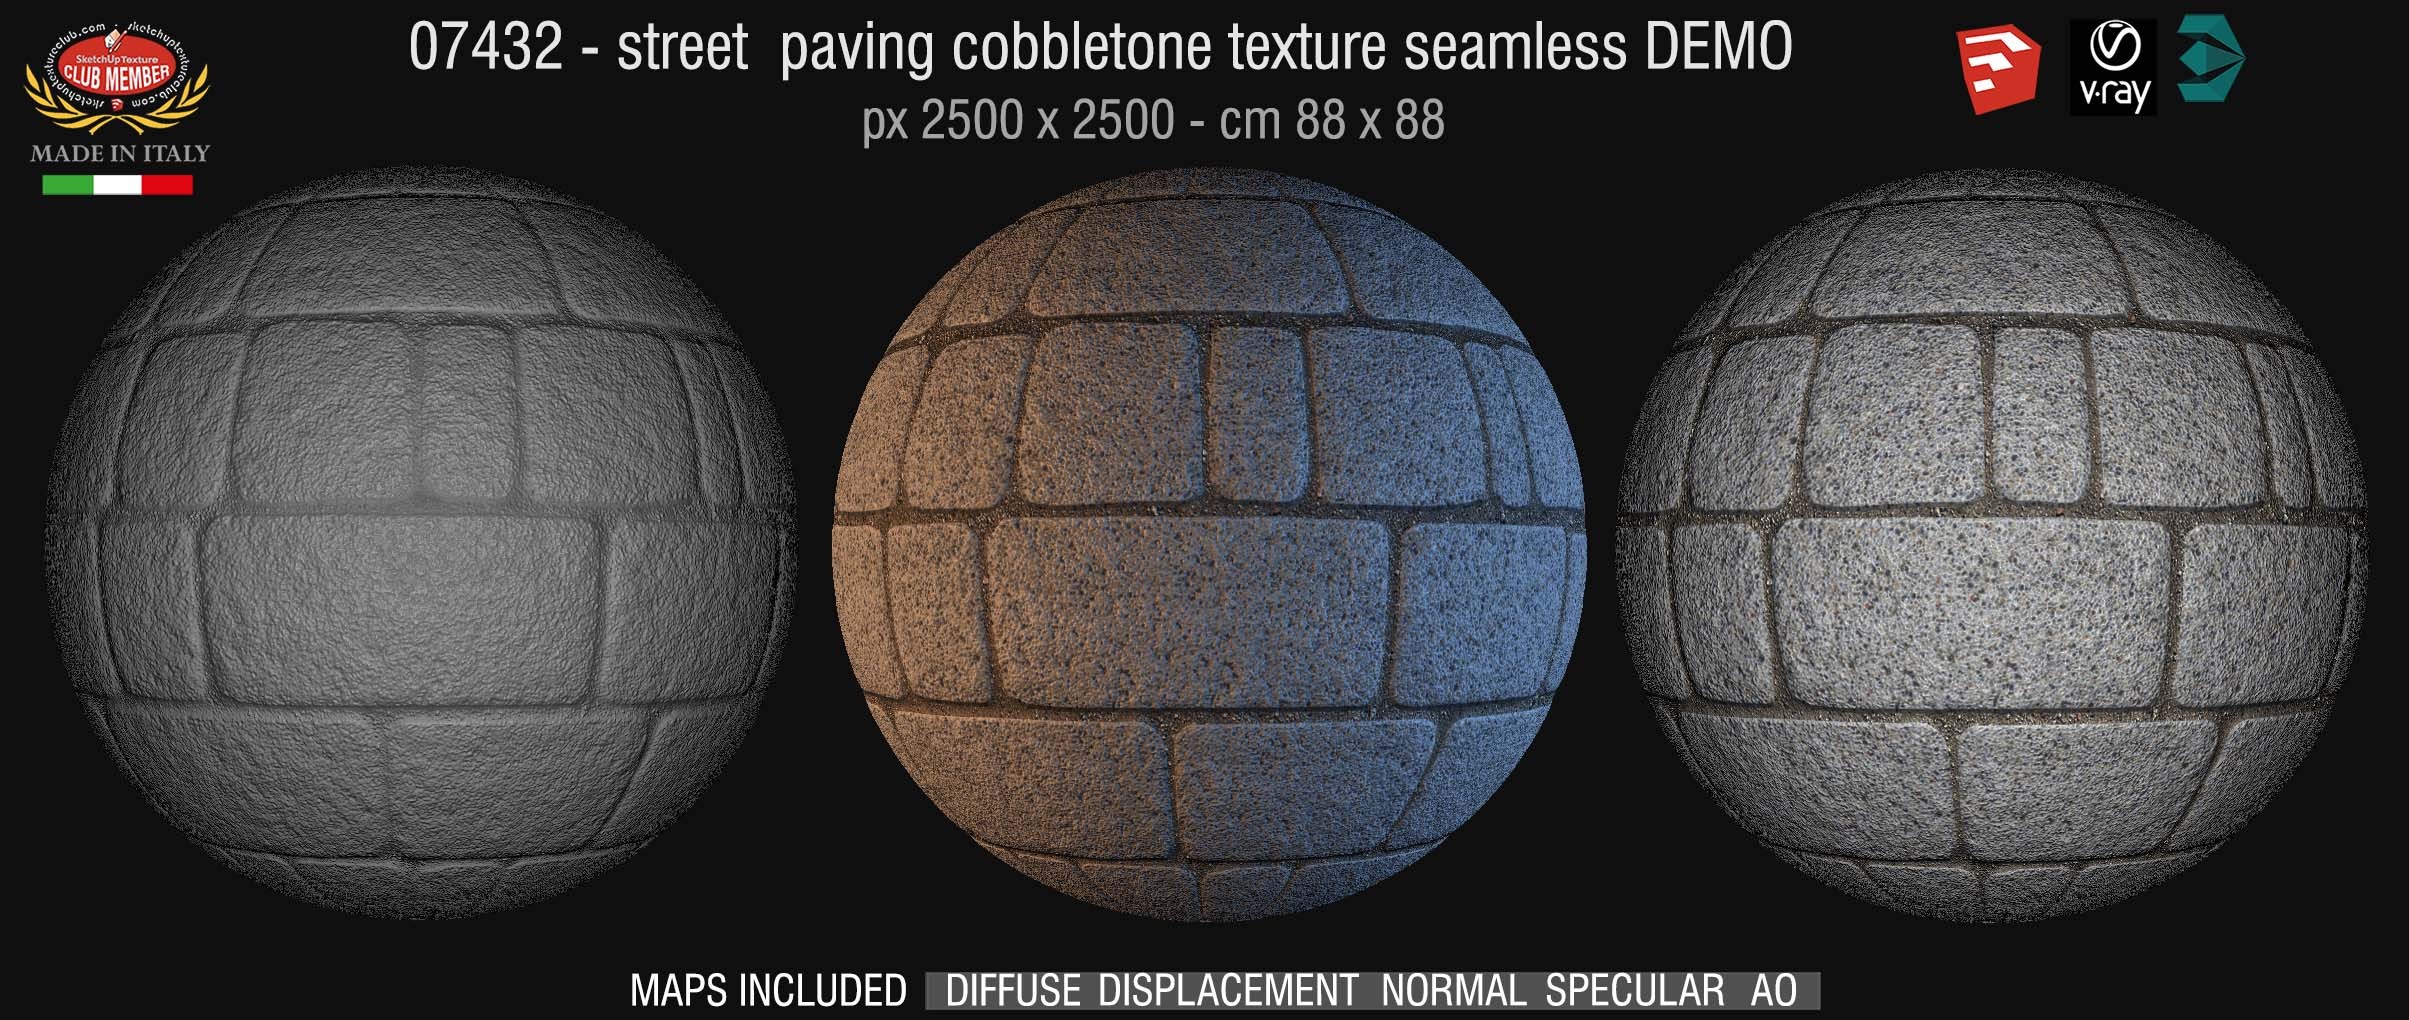 07432 HR Street paving cobblestone texture seamless + maps DEMO